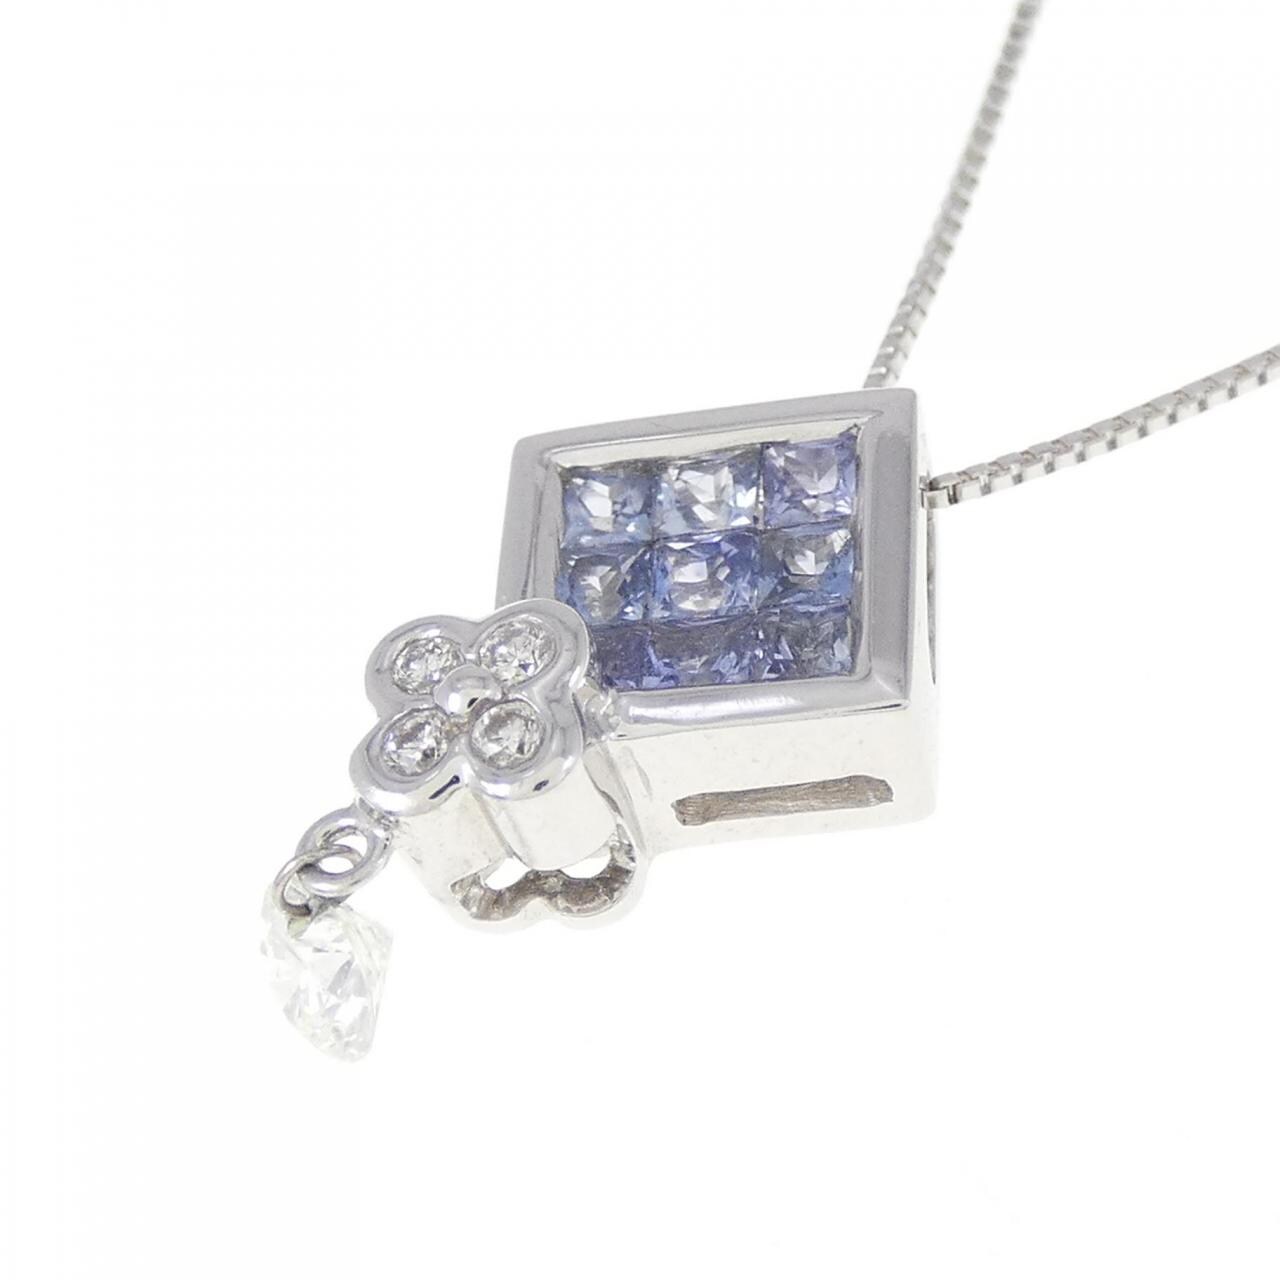 K18WG sapphire necklace